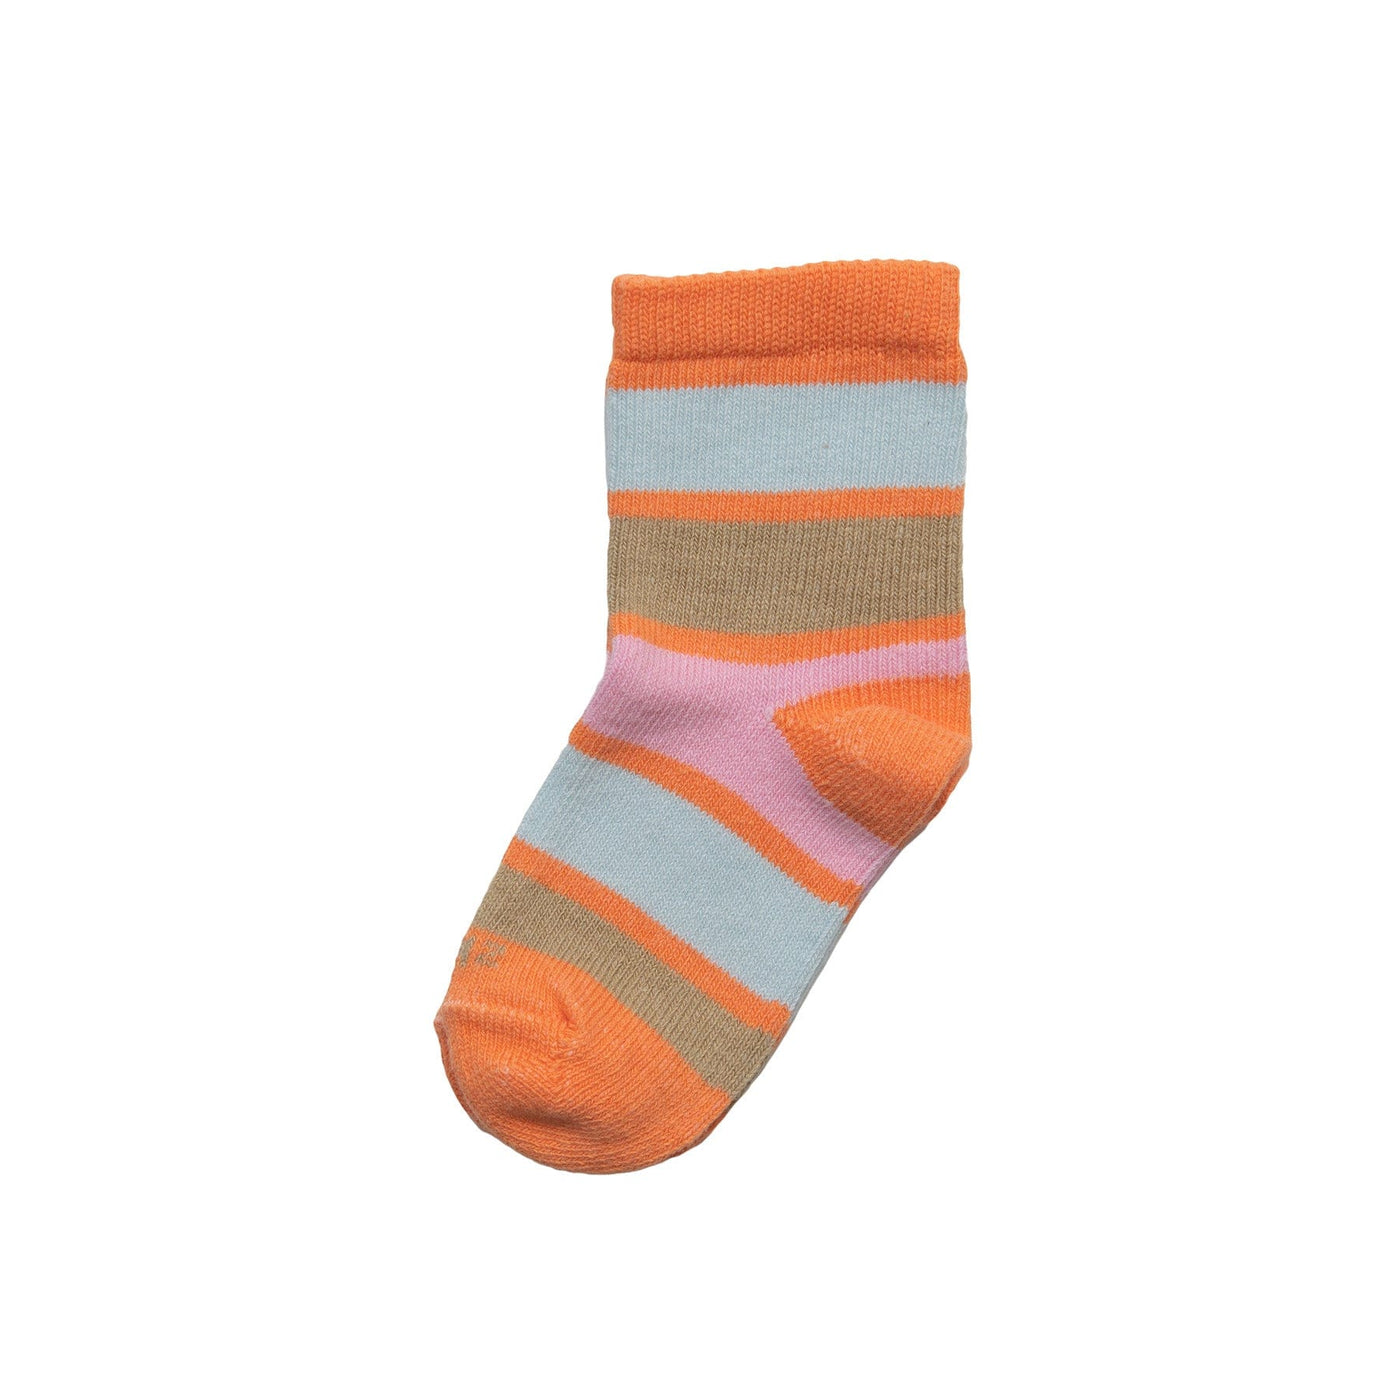 Zkano Kids Medium   (toddler/kid shoe size 8-13) Kids - rugby stripe organic cotton crew socks - tangerine organic-socks-made-in-usa